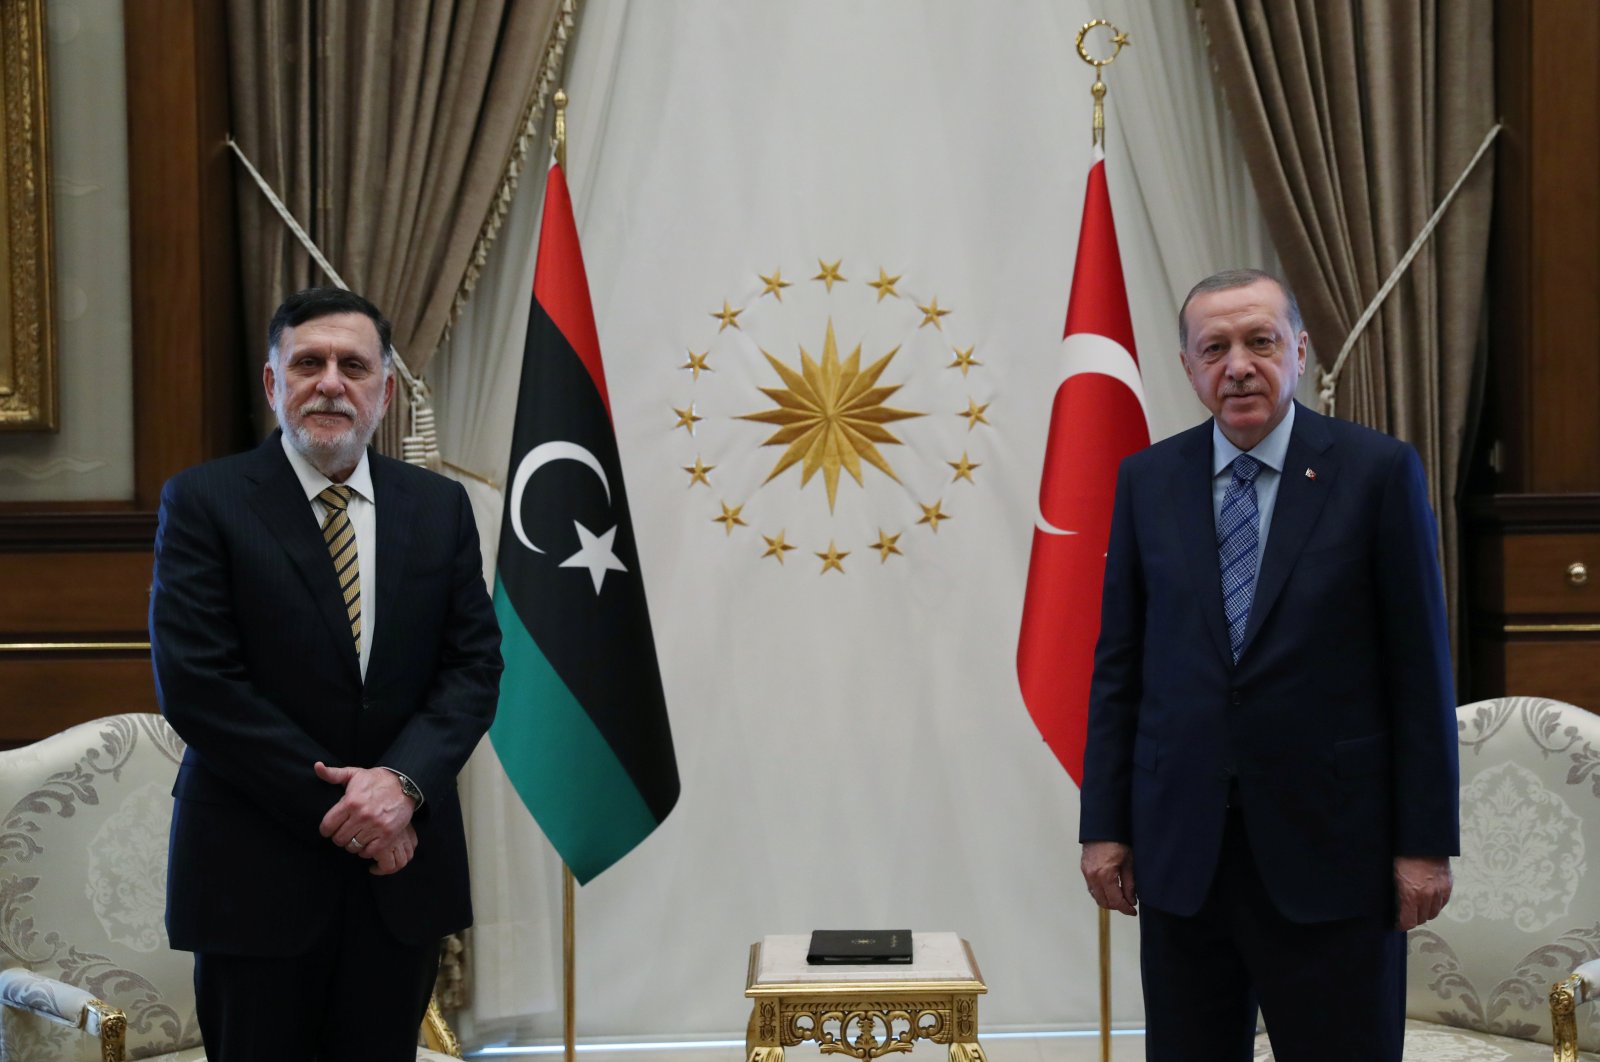 President Tayyip Erdoğan meets with Libya's internationally recognized Prime Minister Fayez al-Sarraj at the Presidential Palace, Ankara, Turkey, June 4, 2020. (REUTERS Photo)